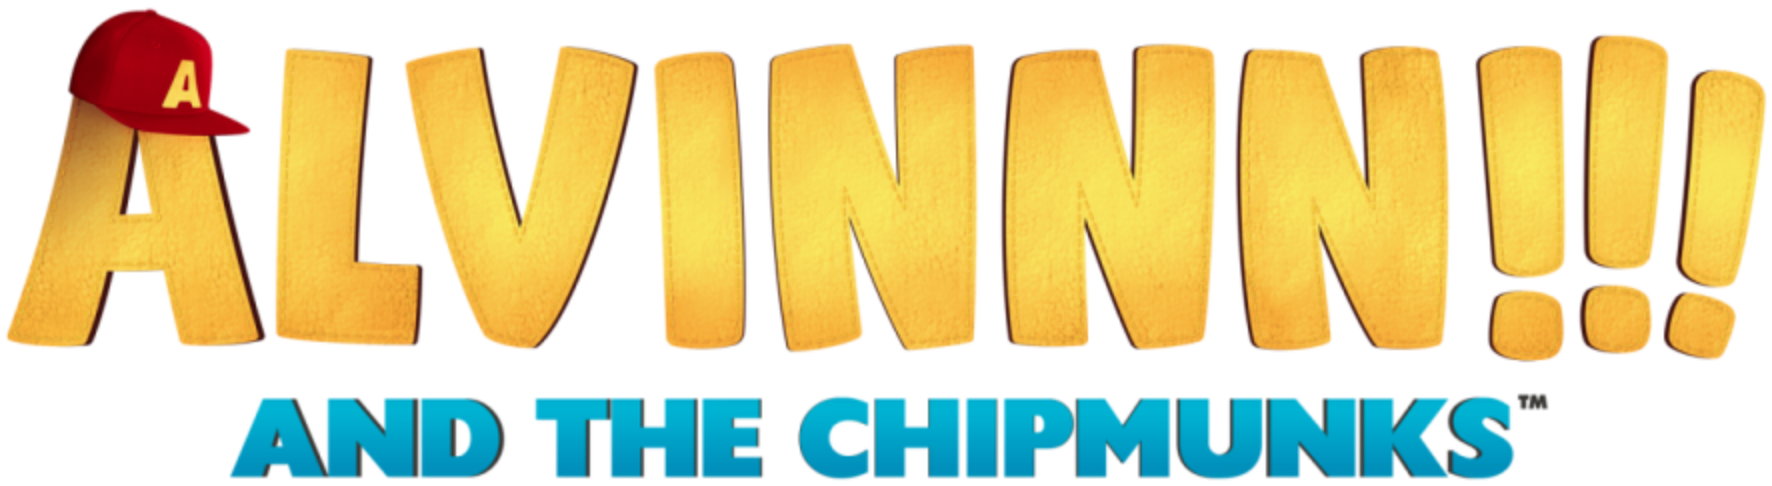 Alvinnn!!! And the Chipmunks 